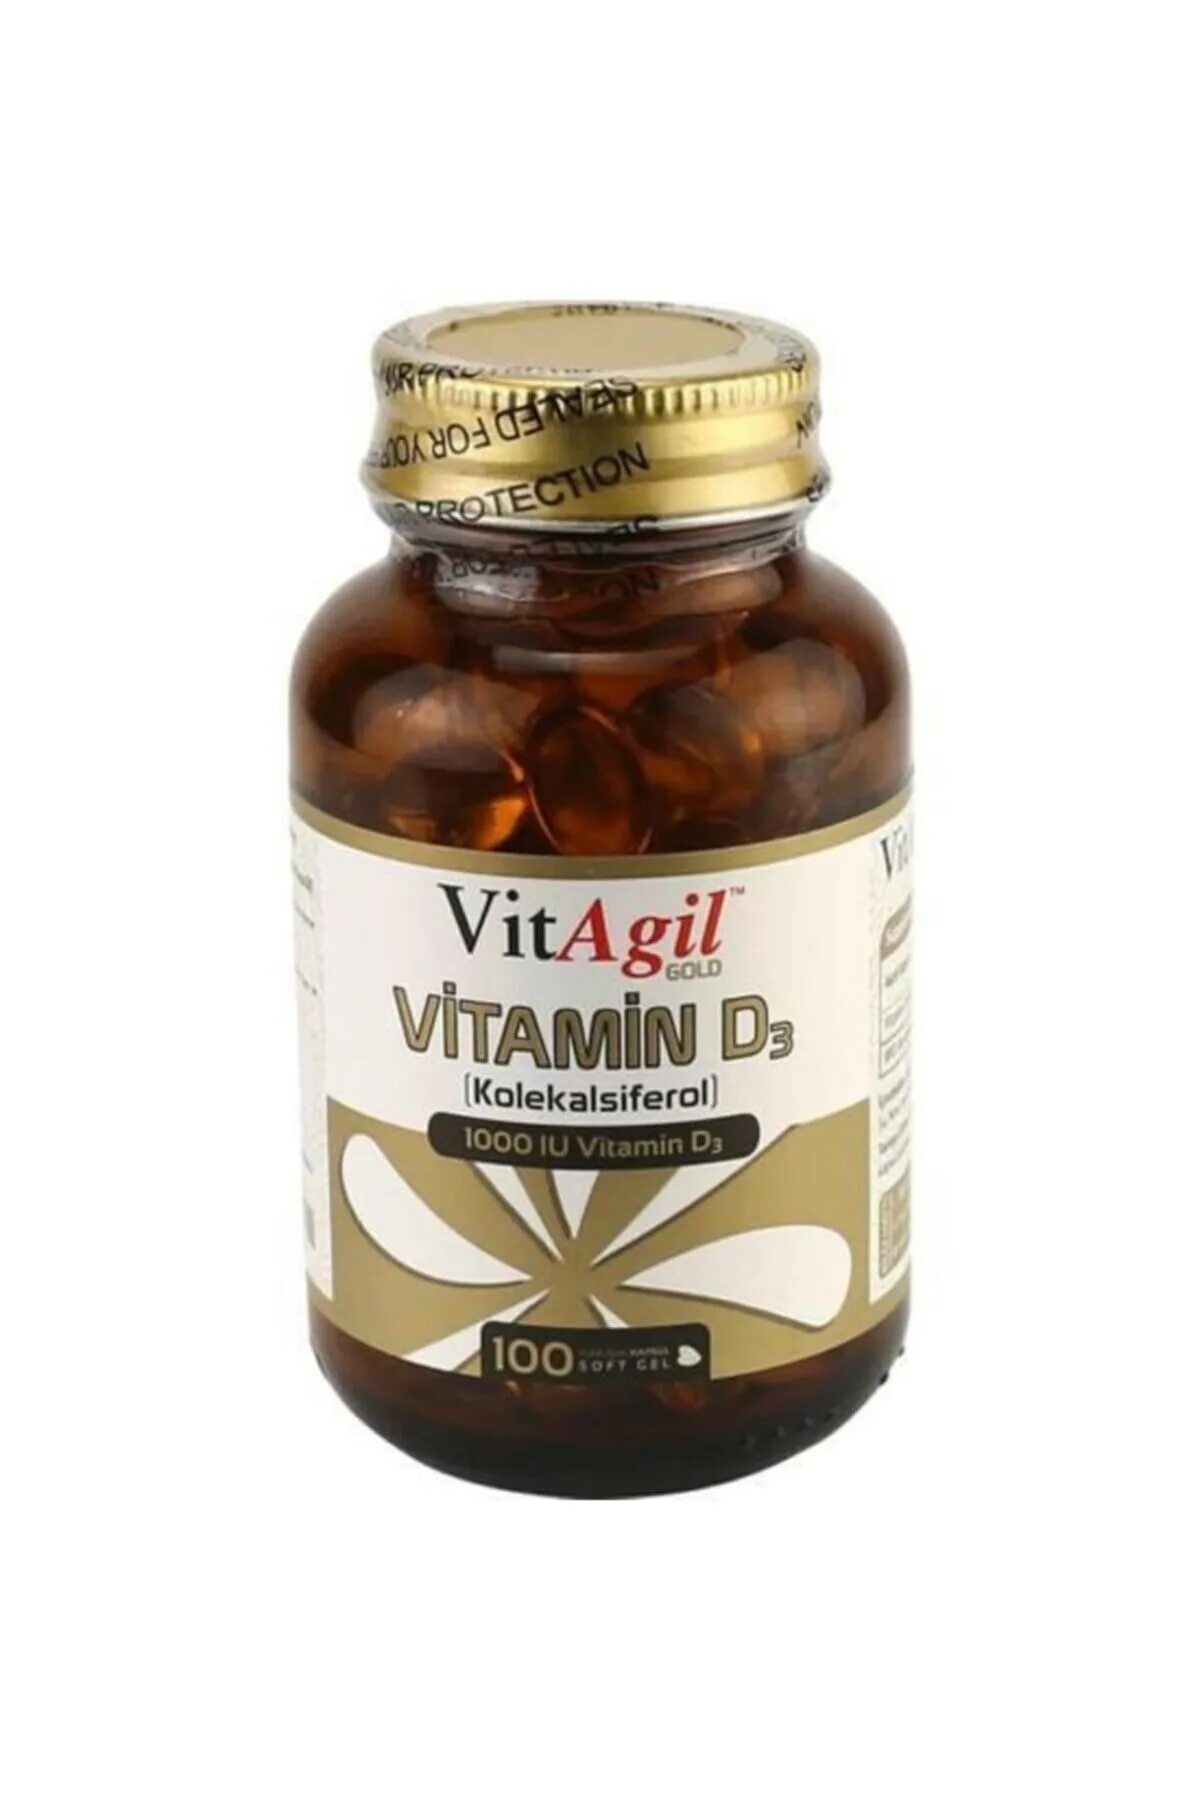 Vitagil витамин д3. Vitagil Gold витамин д3. Vitagil витамины турецкие. Витамин д турецкий.